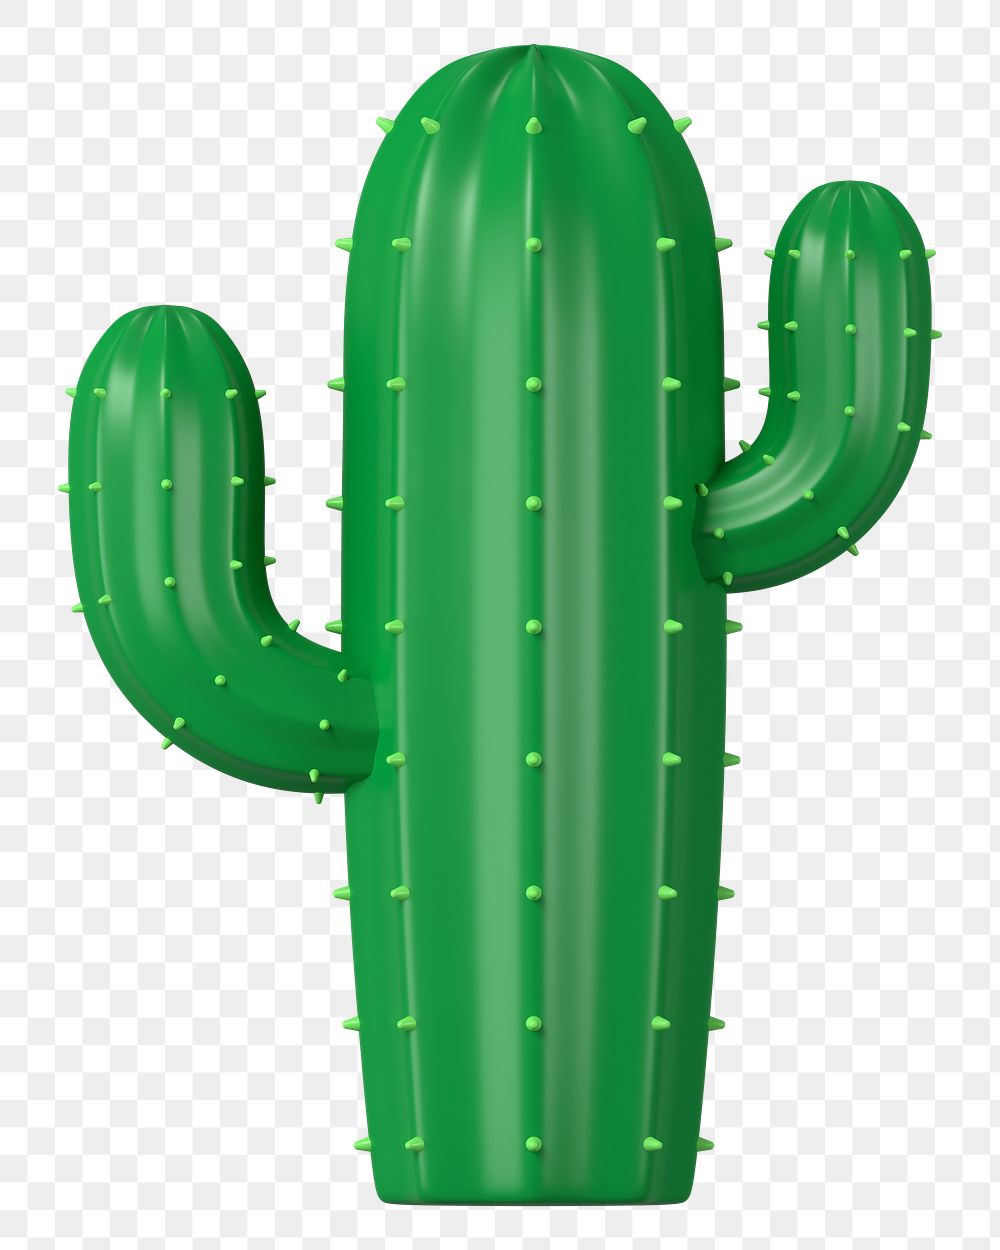 Cute cactus png sticker, 3D desert plant illustration on transparent background